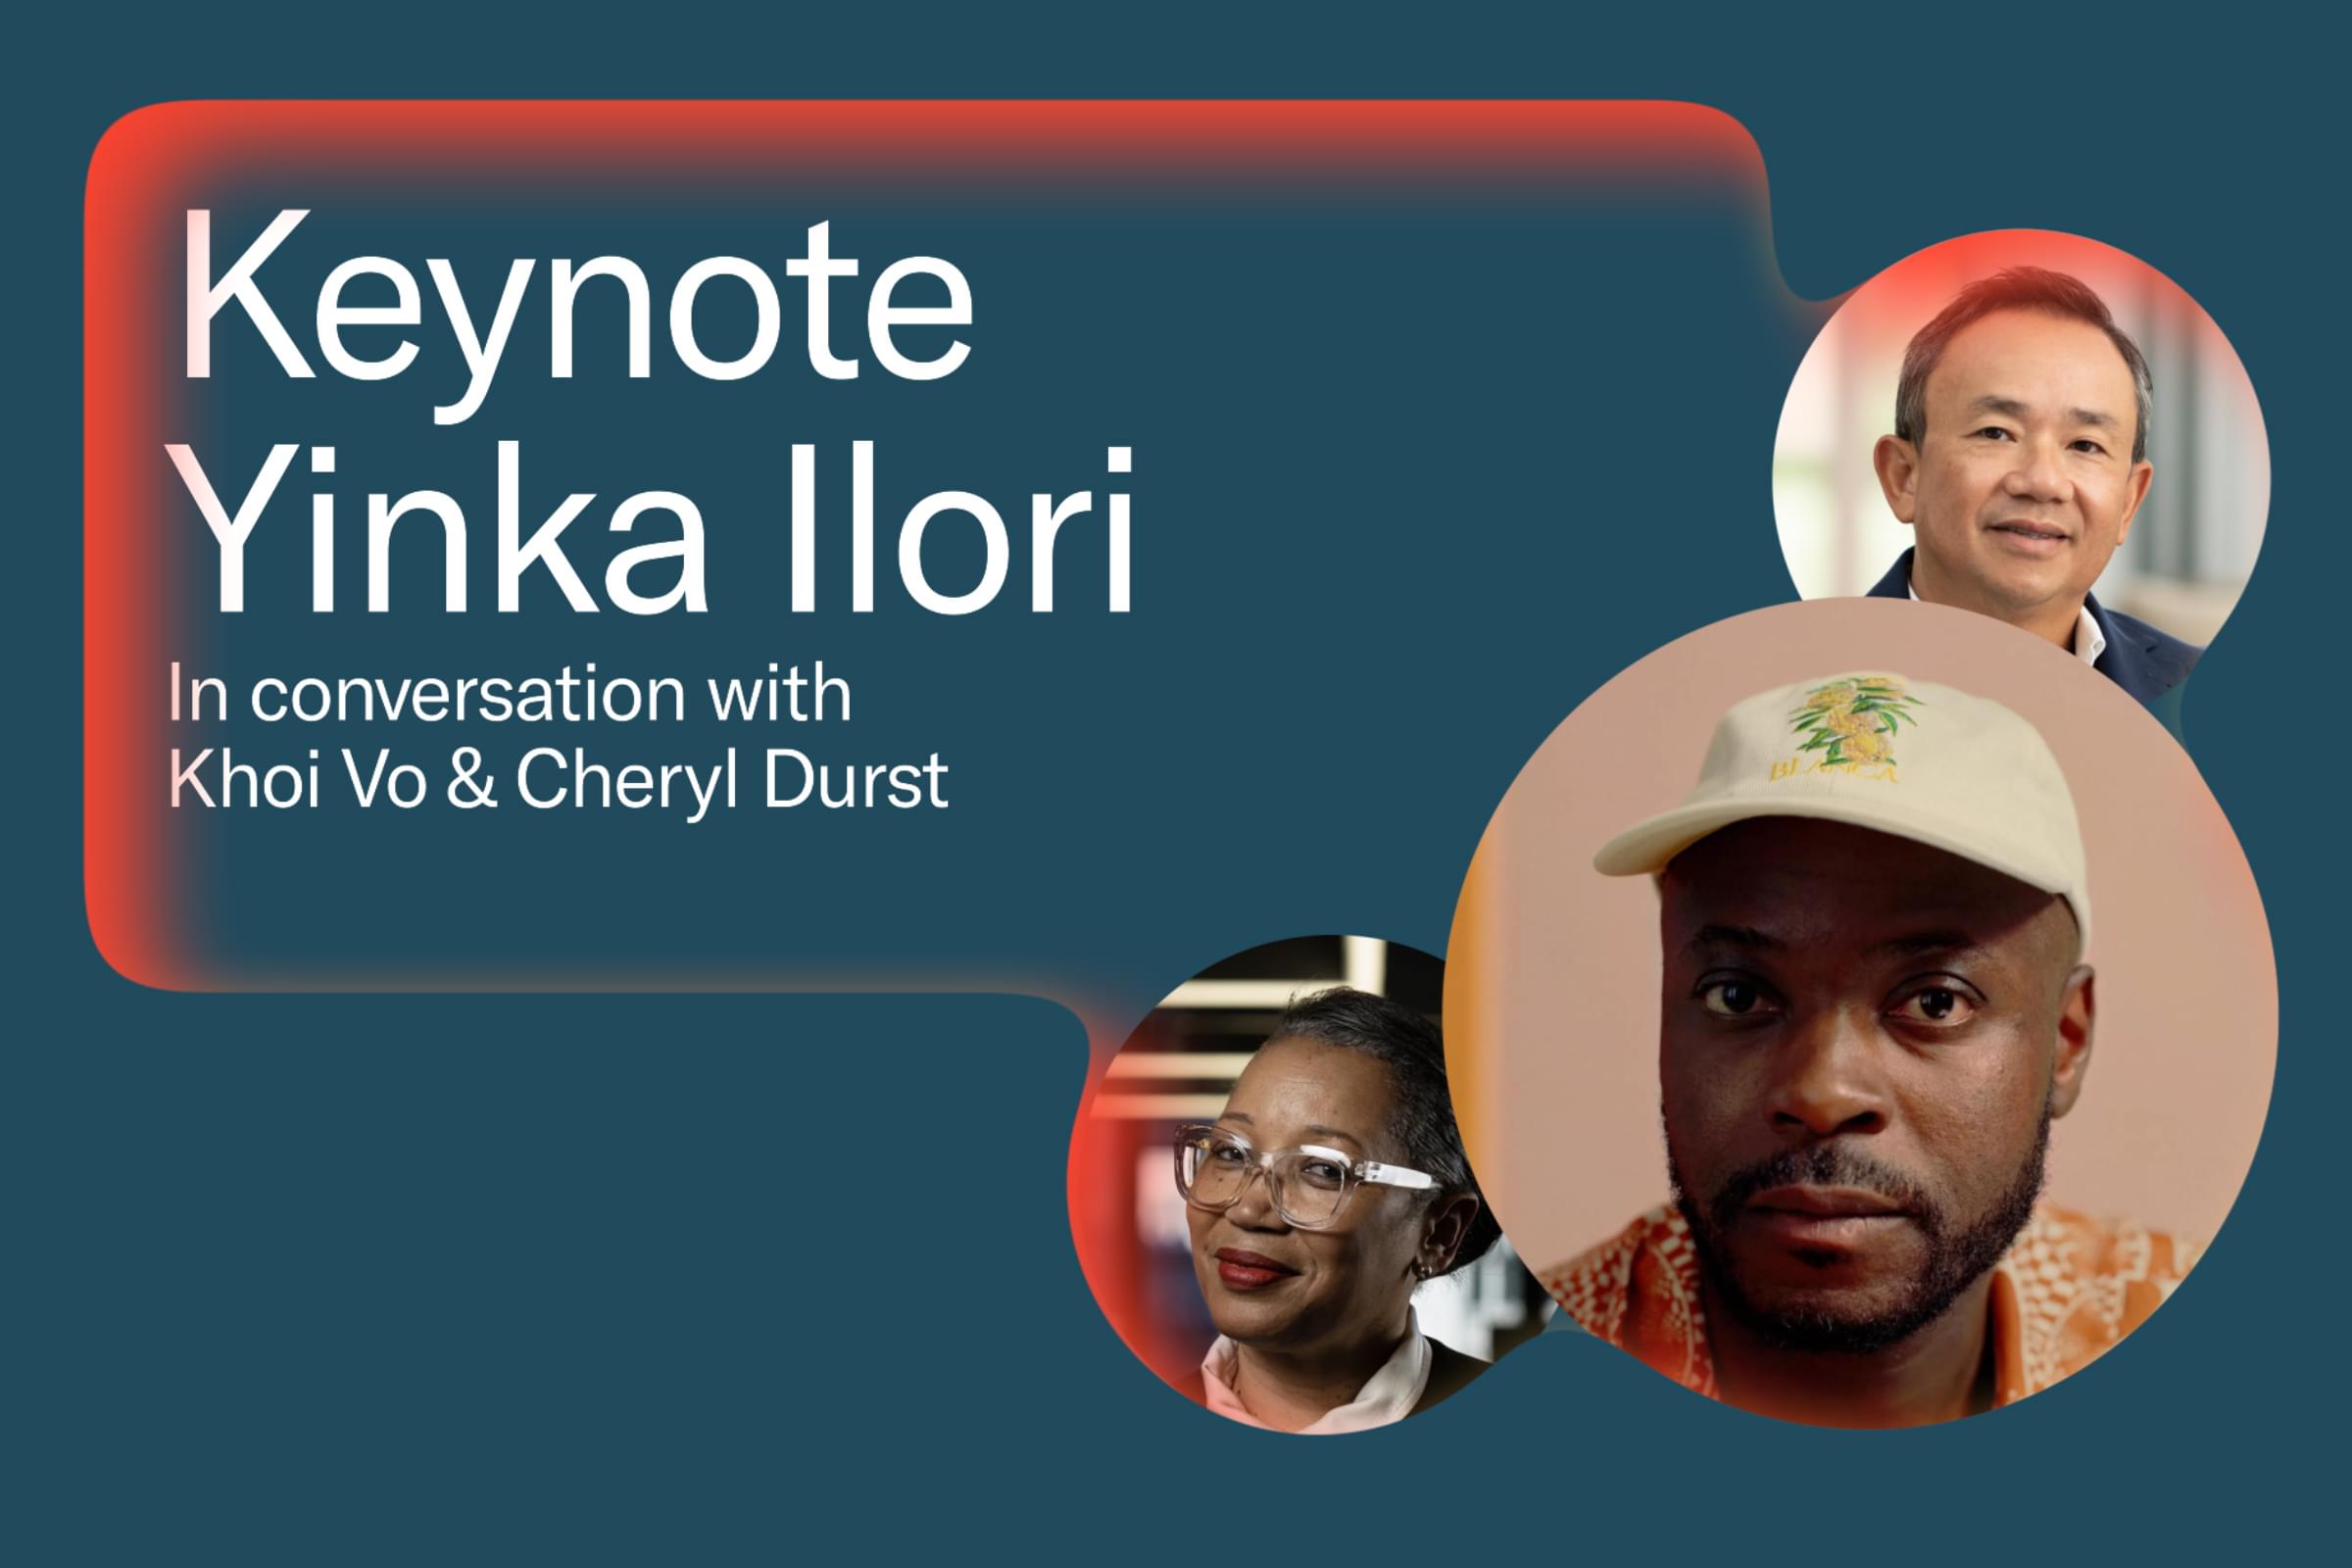 Keynote Yinka Ilori - In conversation with Khoi Vo & Cheryl Durst